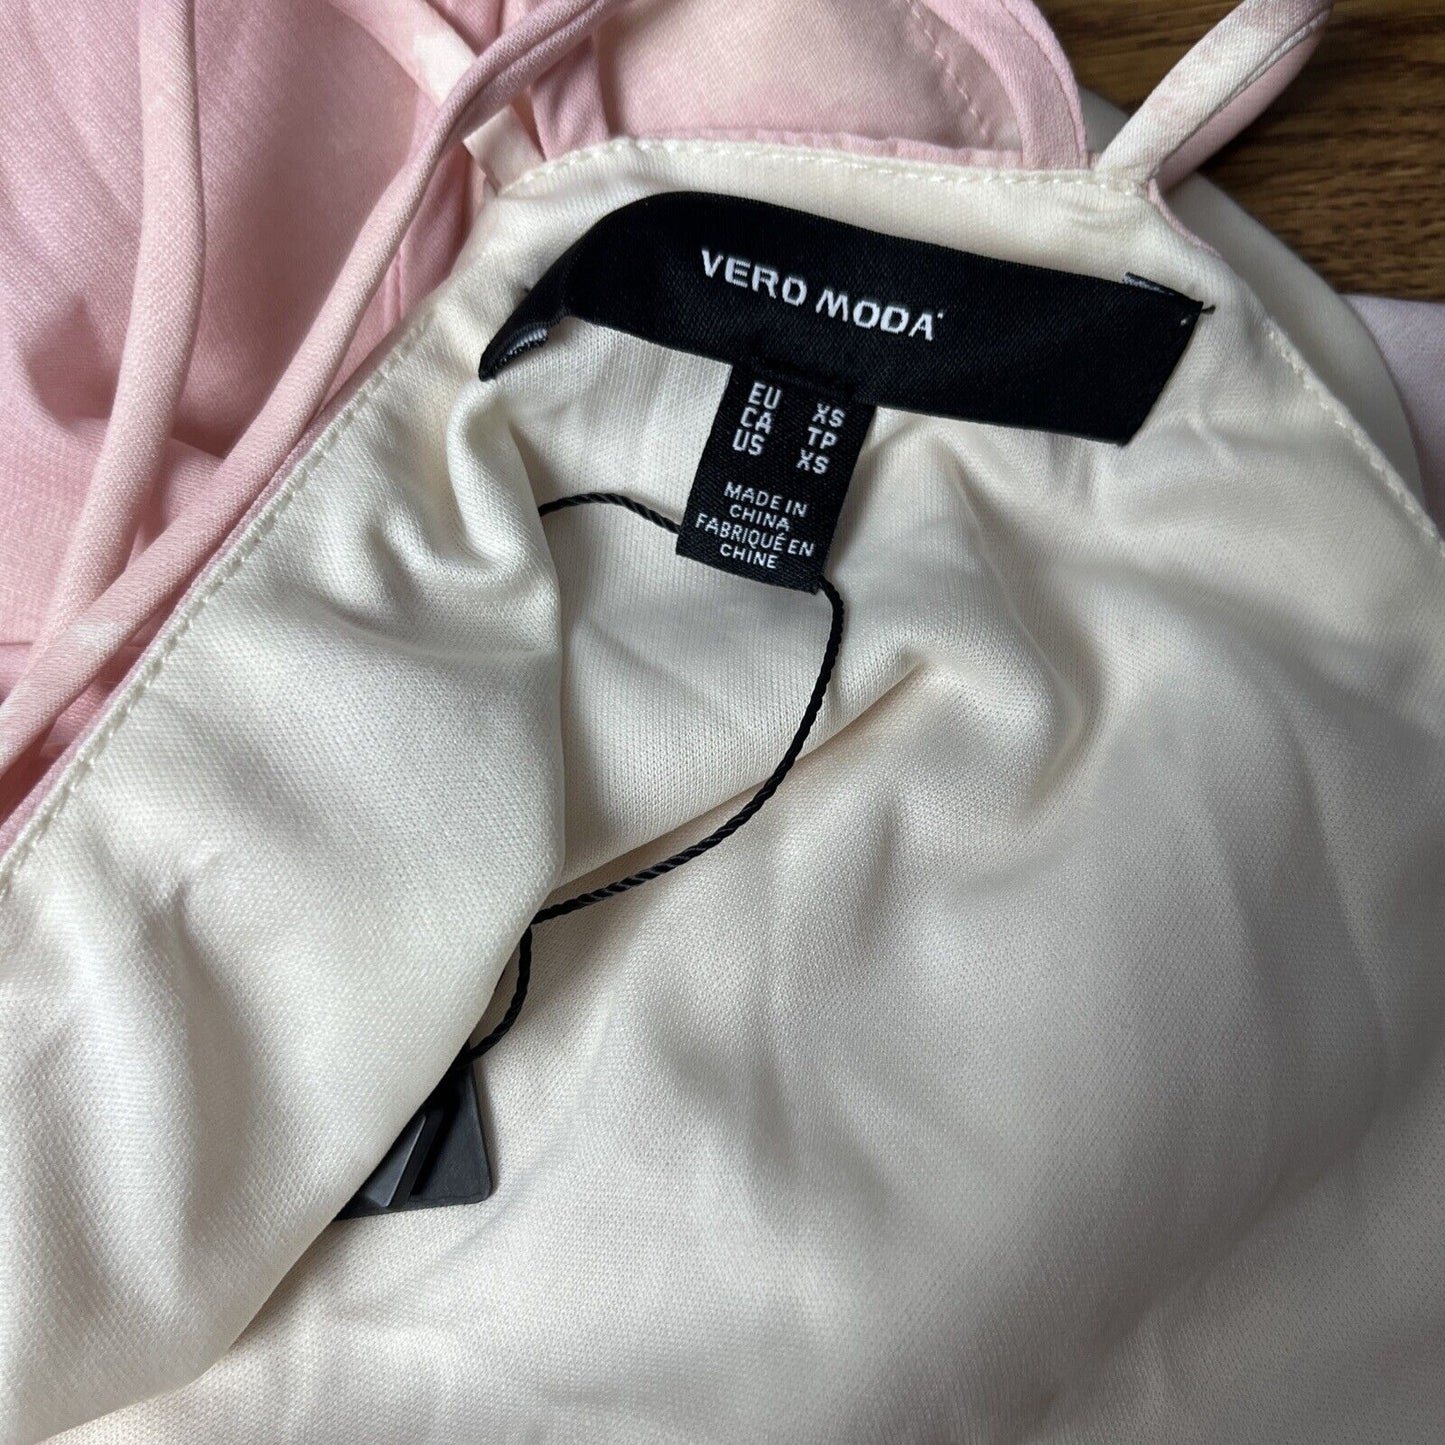 Vero Moda Women's Pink Tie Dyed Sleeveless Criss Cross Back Cami Size: X-Small